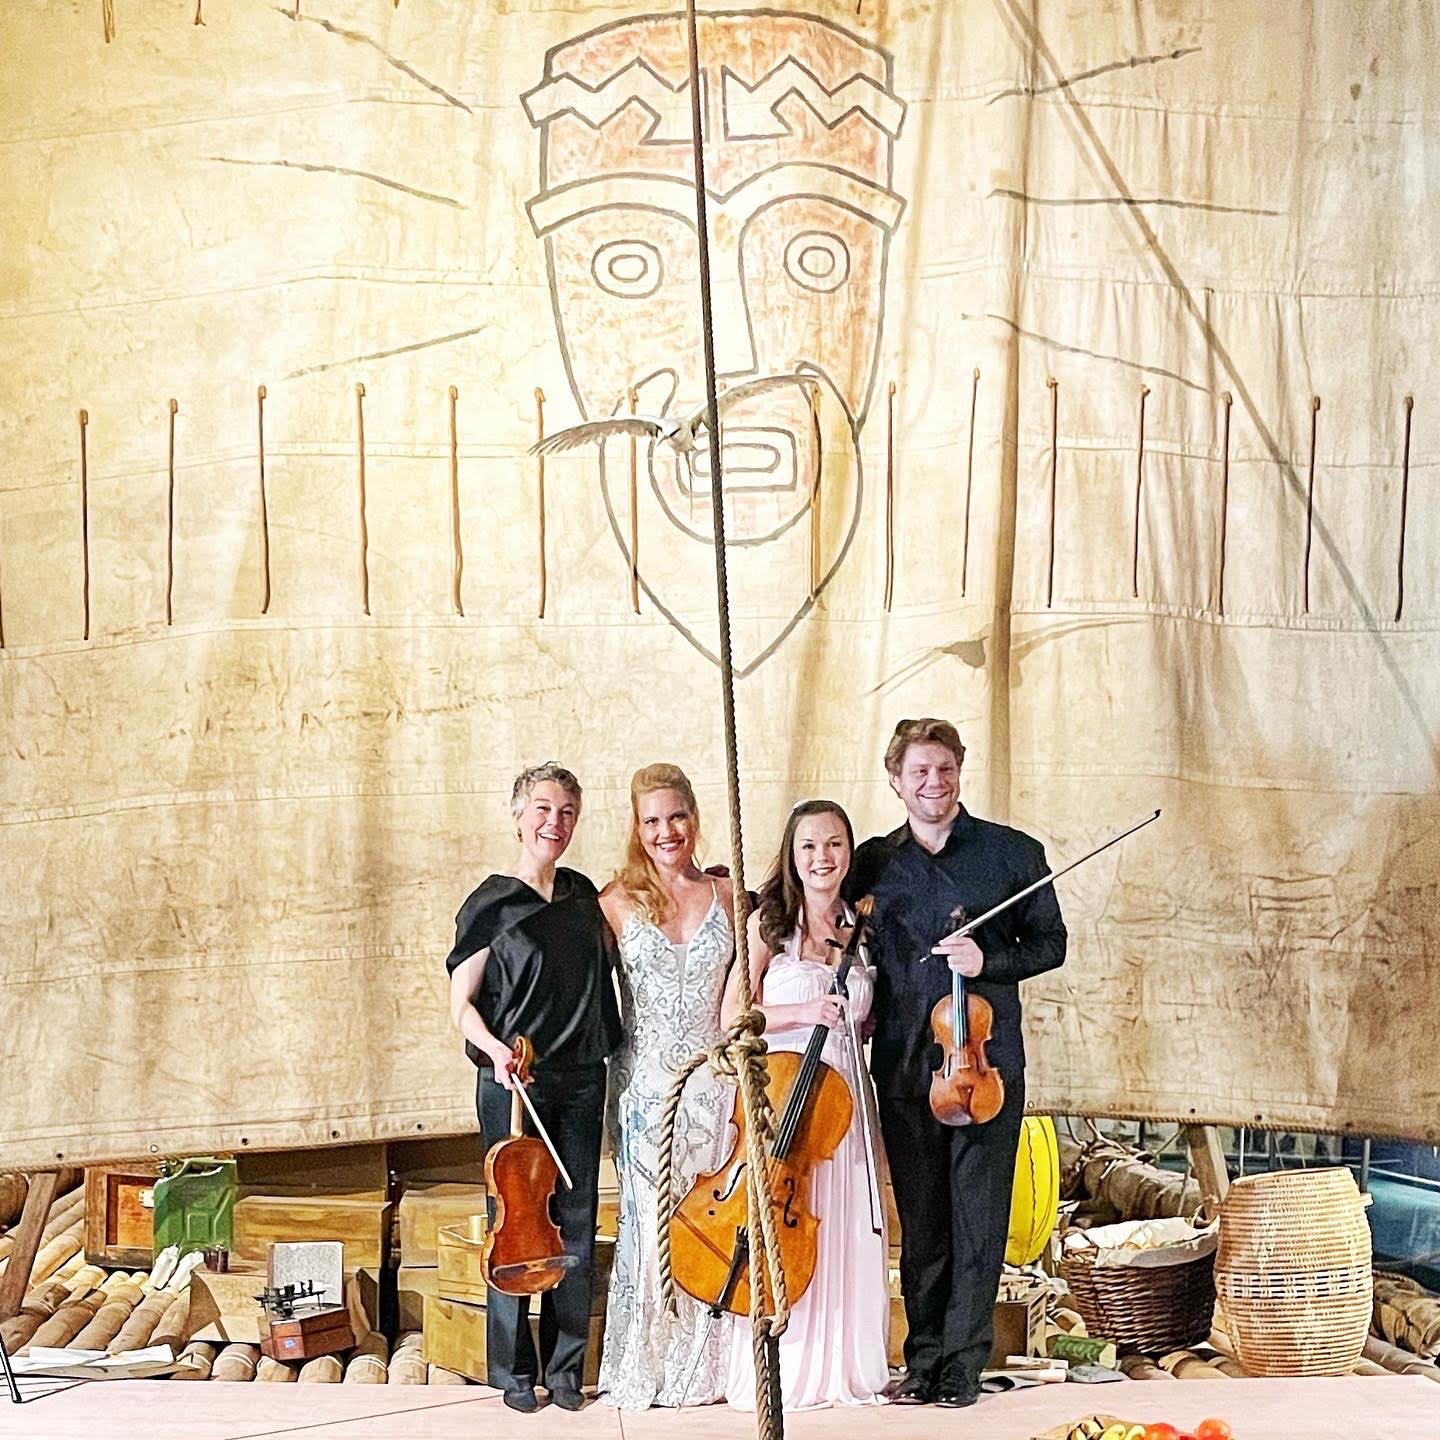 Ida Bryhn, Julie Coucheron, Sandra Lied Haga and David Coucheron with instruments in front of the Kon-Tiki sail with the Kon-Tiki logo